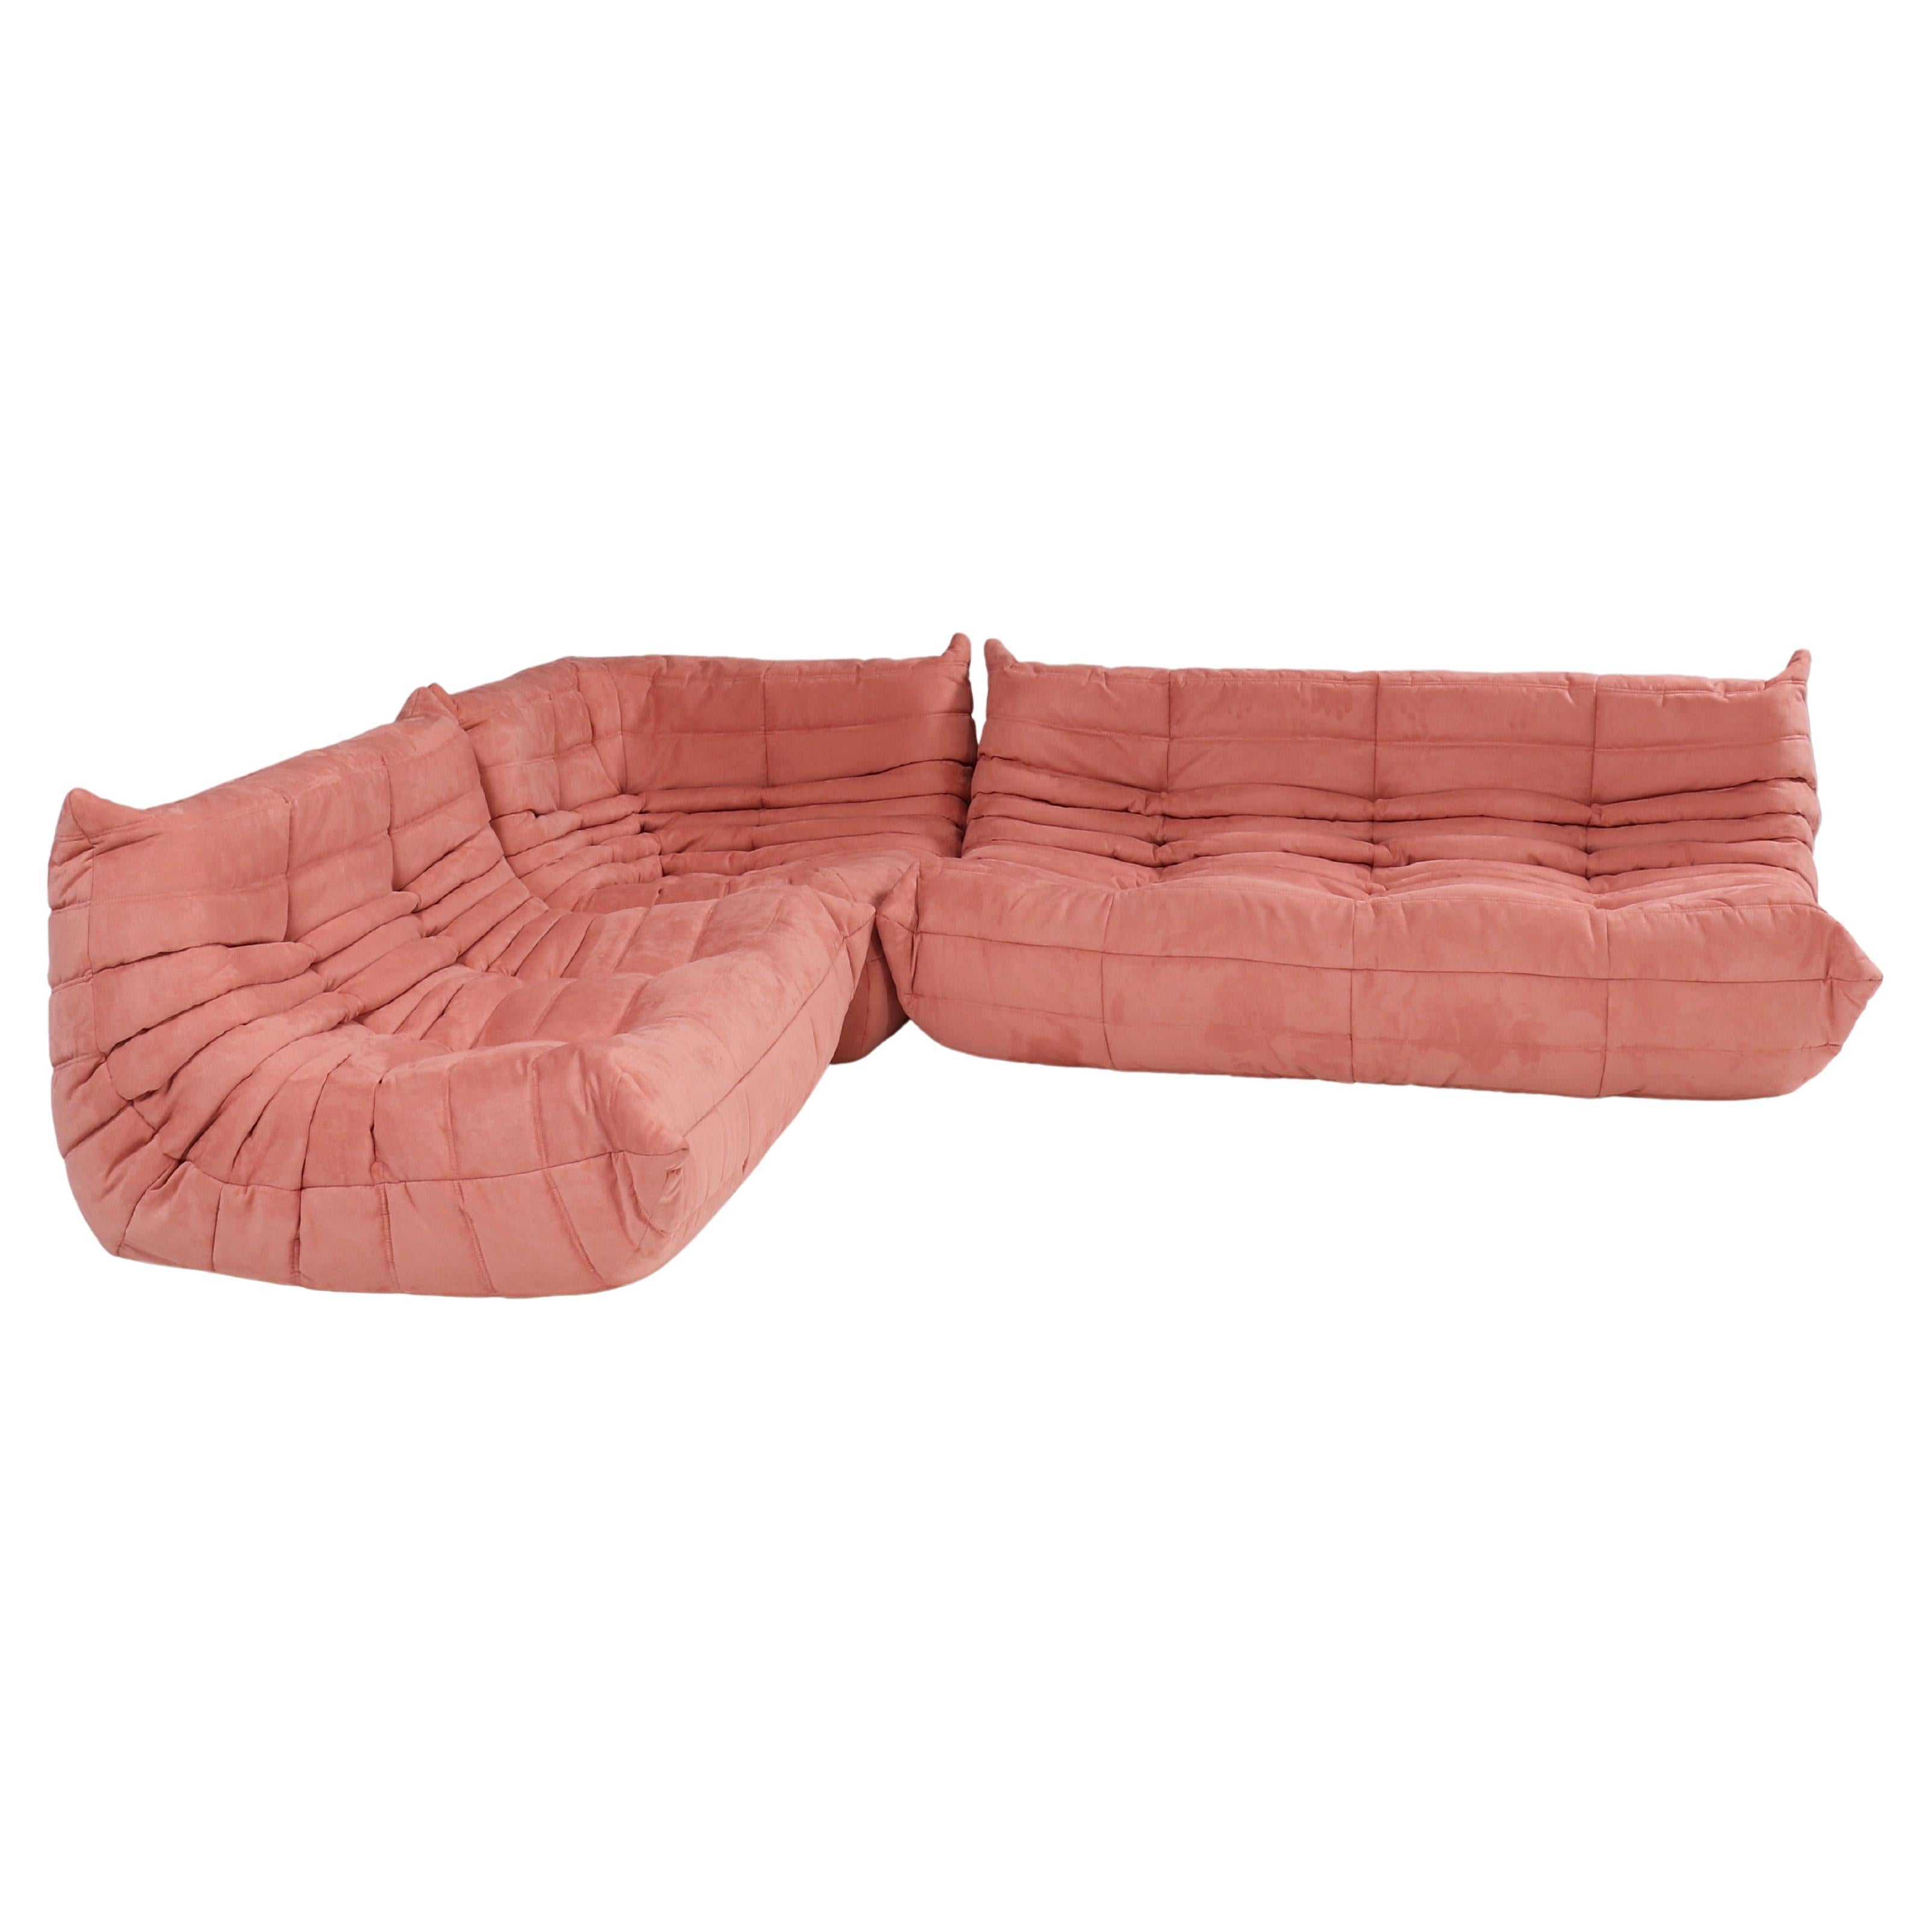 Ligne Roset by Michel Ducaroy Togo Pink Modular Sofa and Footstool, Set of 3